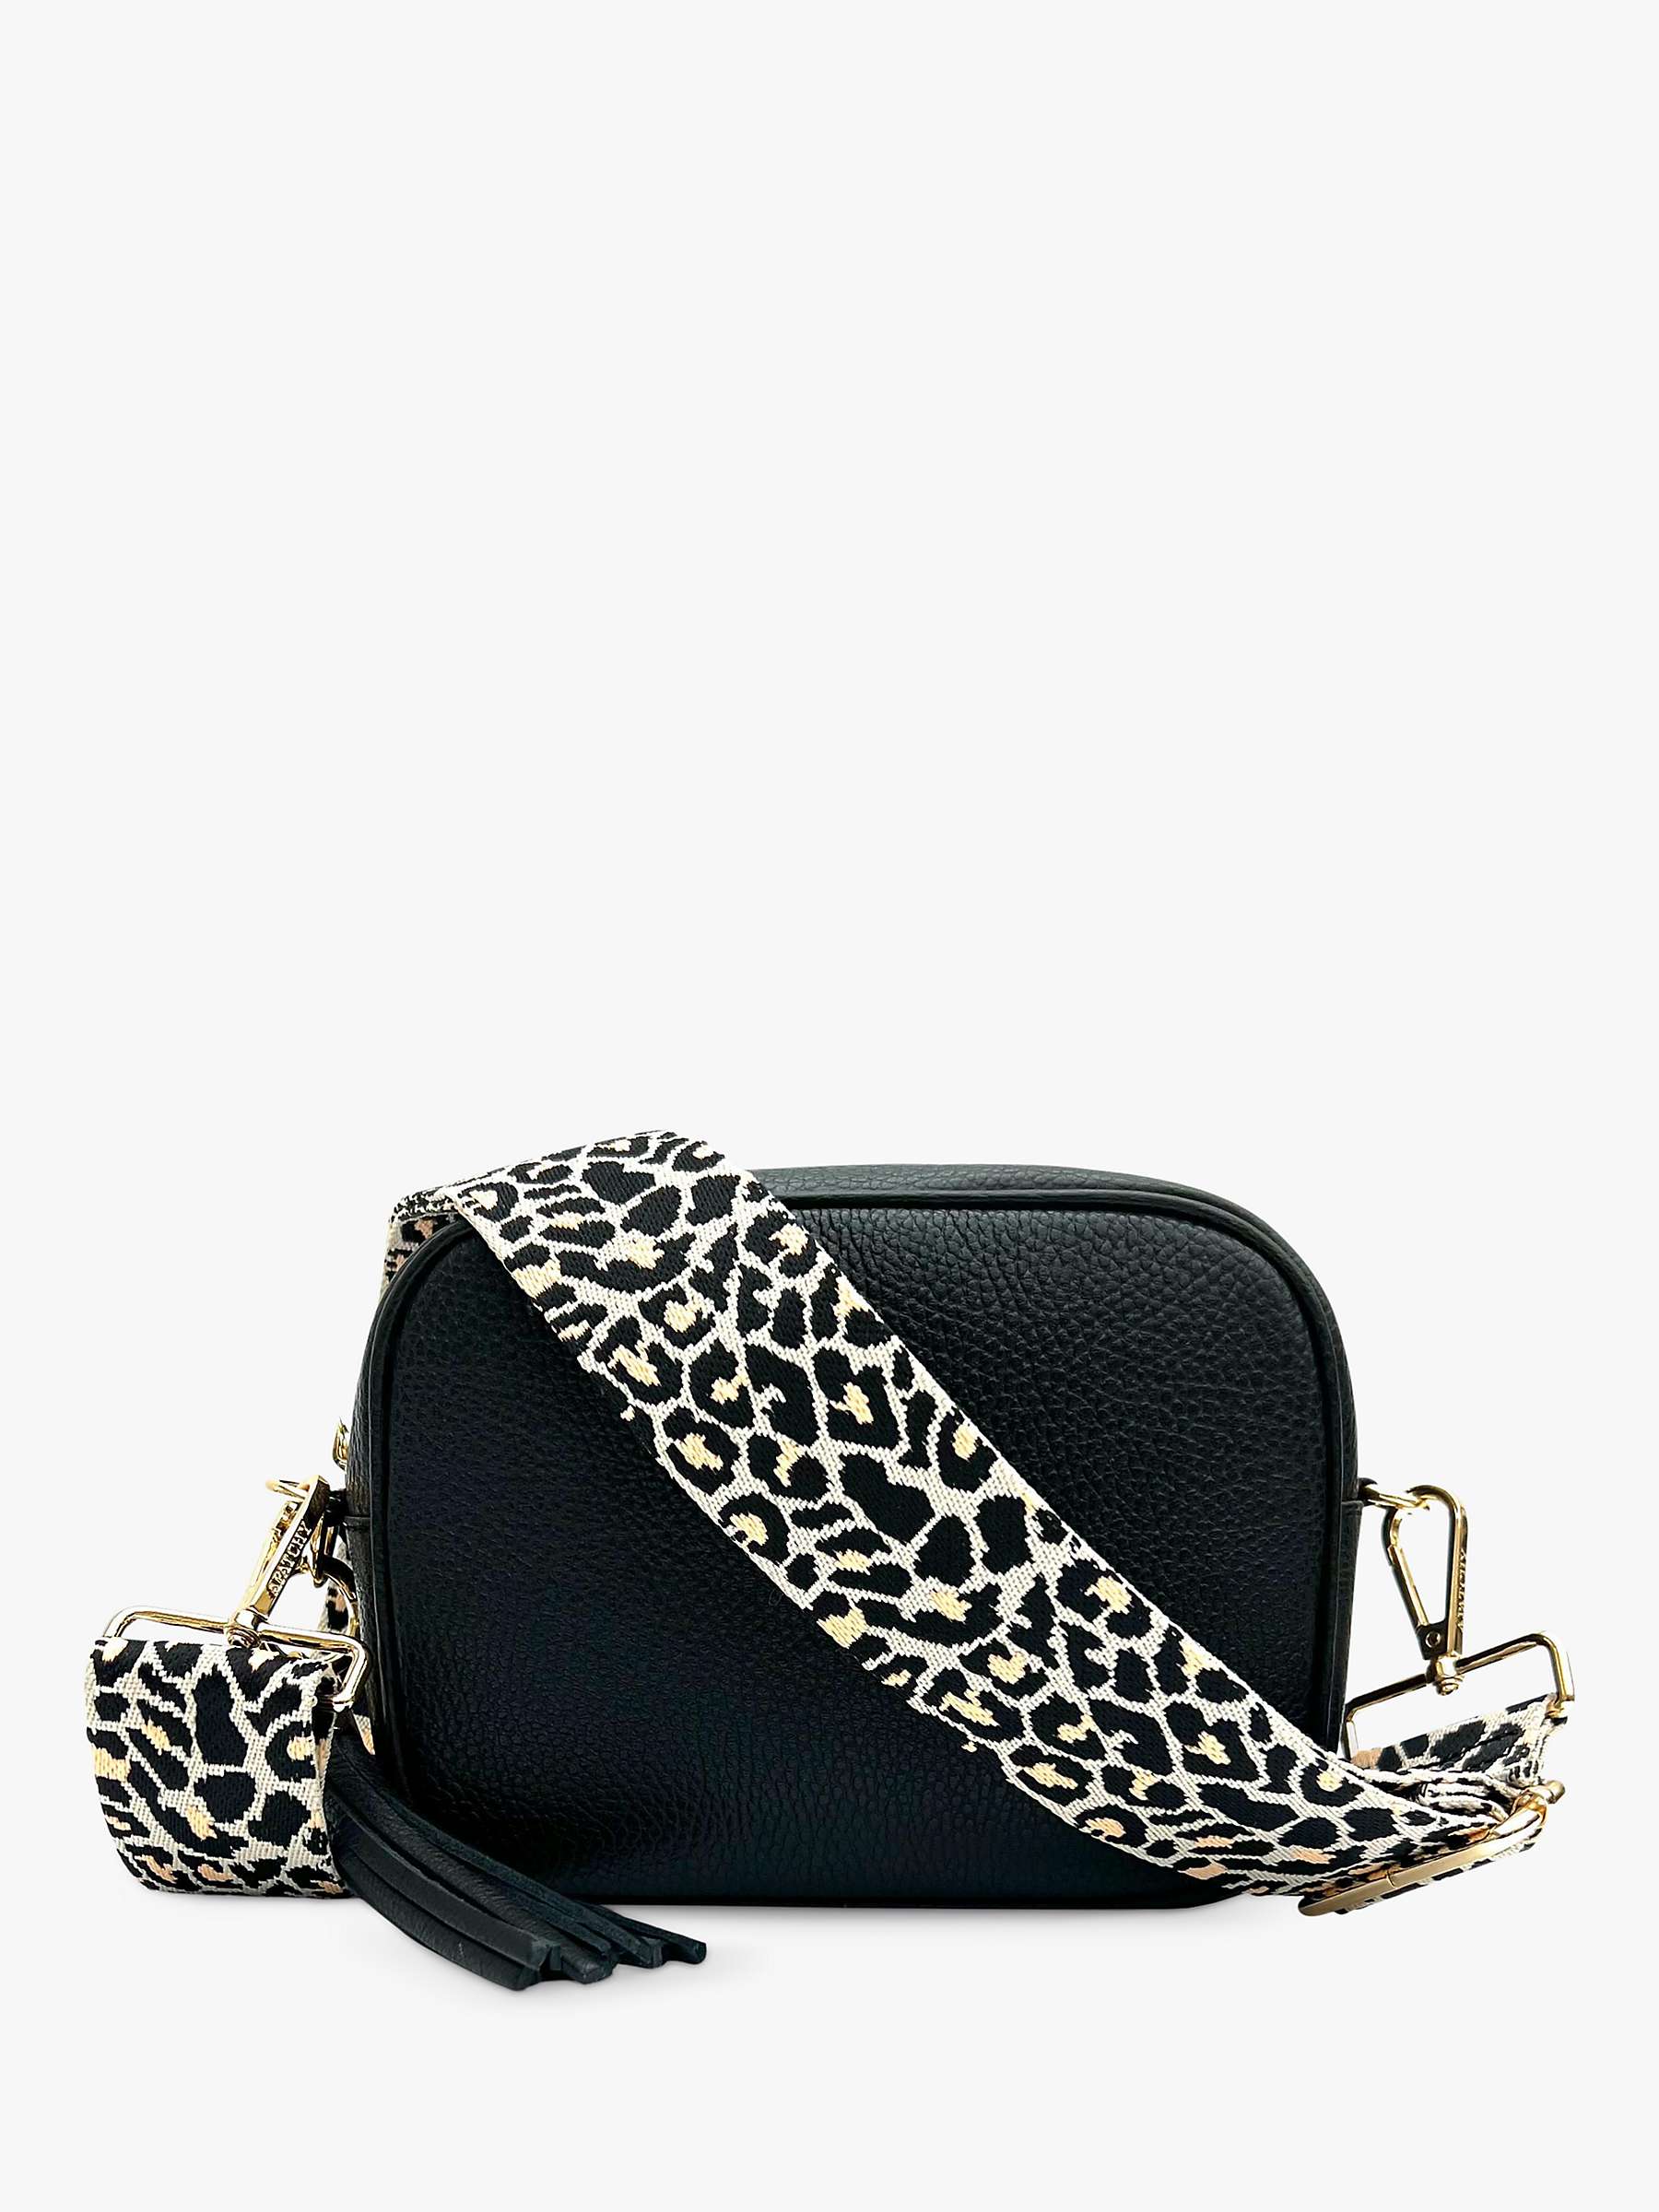 Buy Apatchy Cheetah Print Strap Leather Crossbody Bag, Black/Multi Online at johnlewis.com